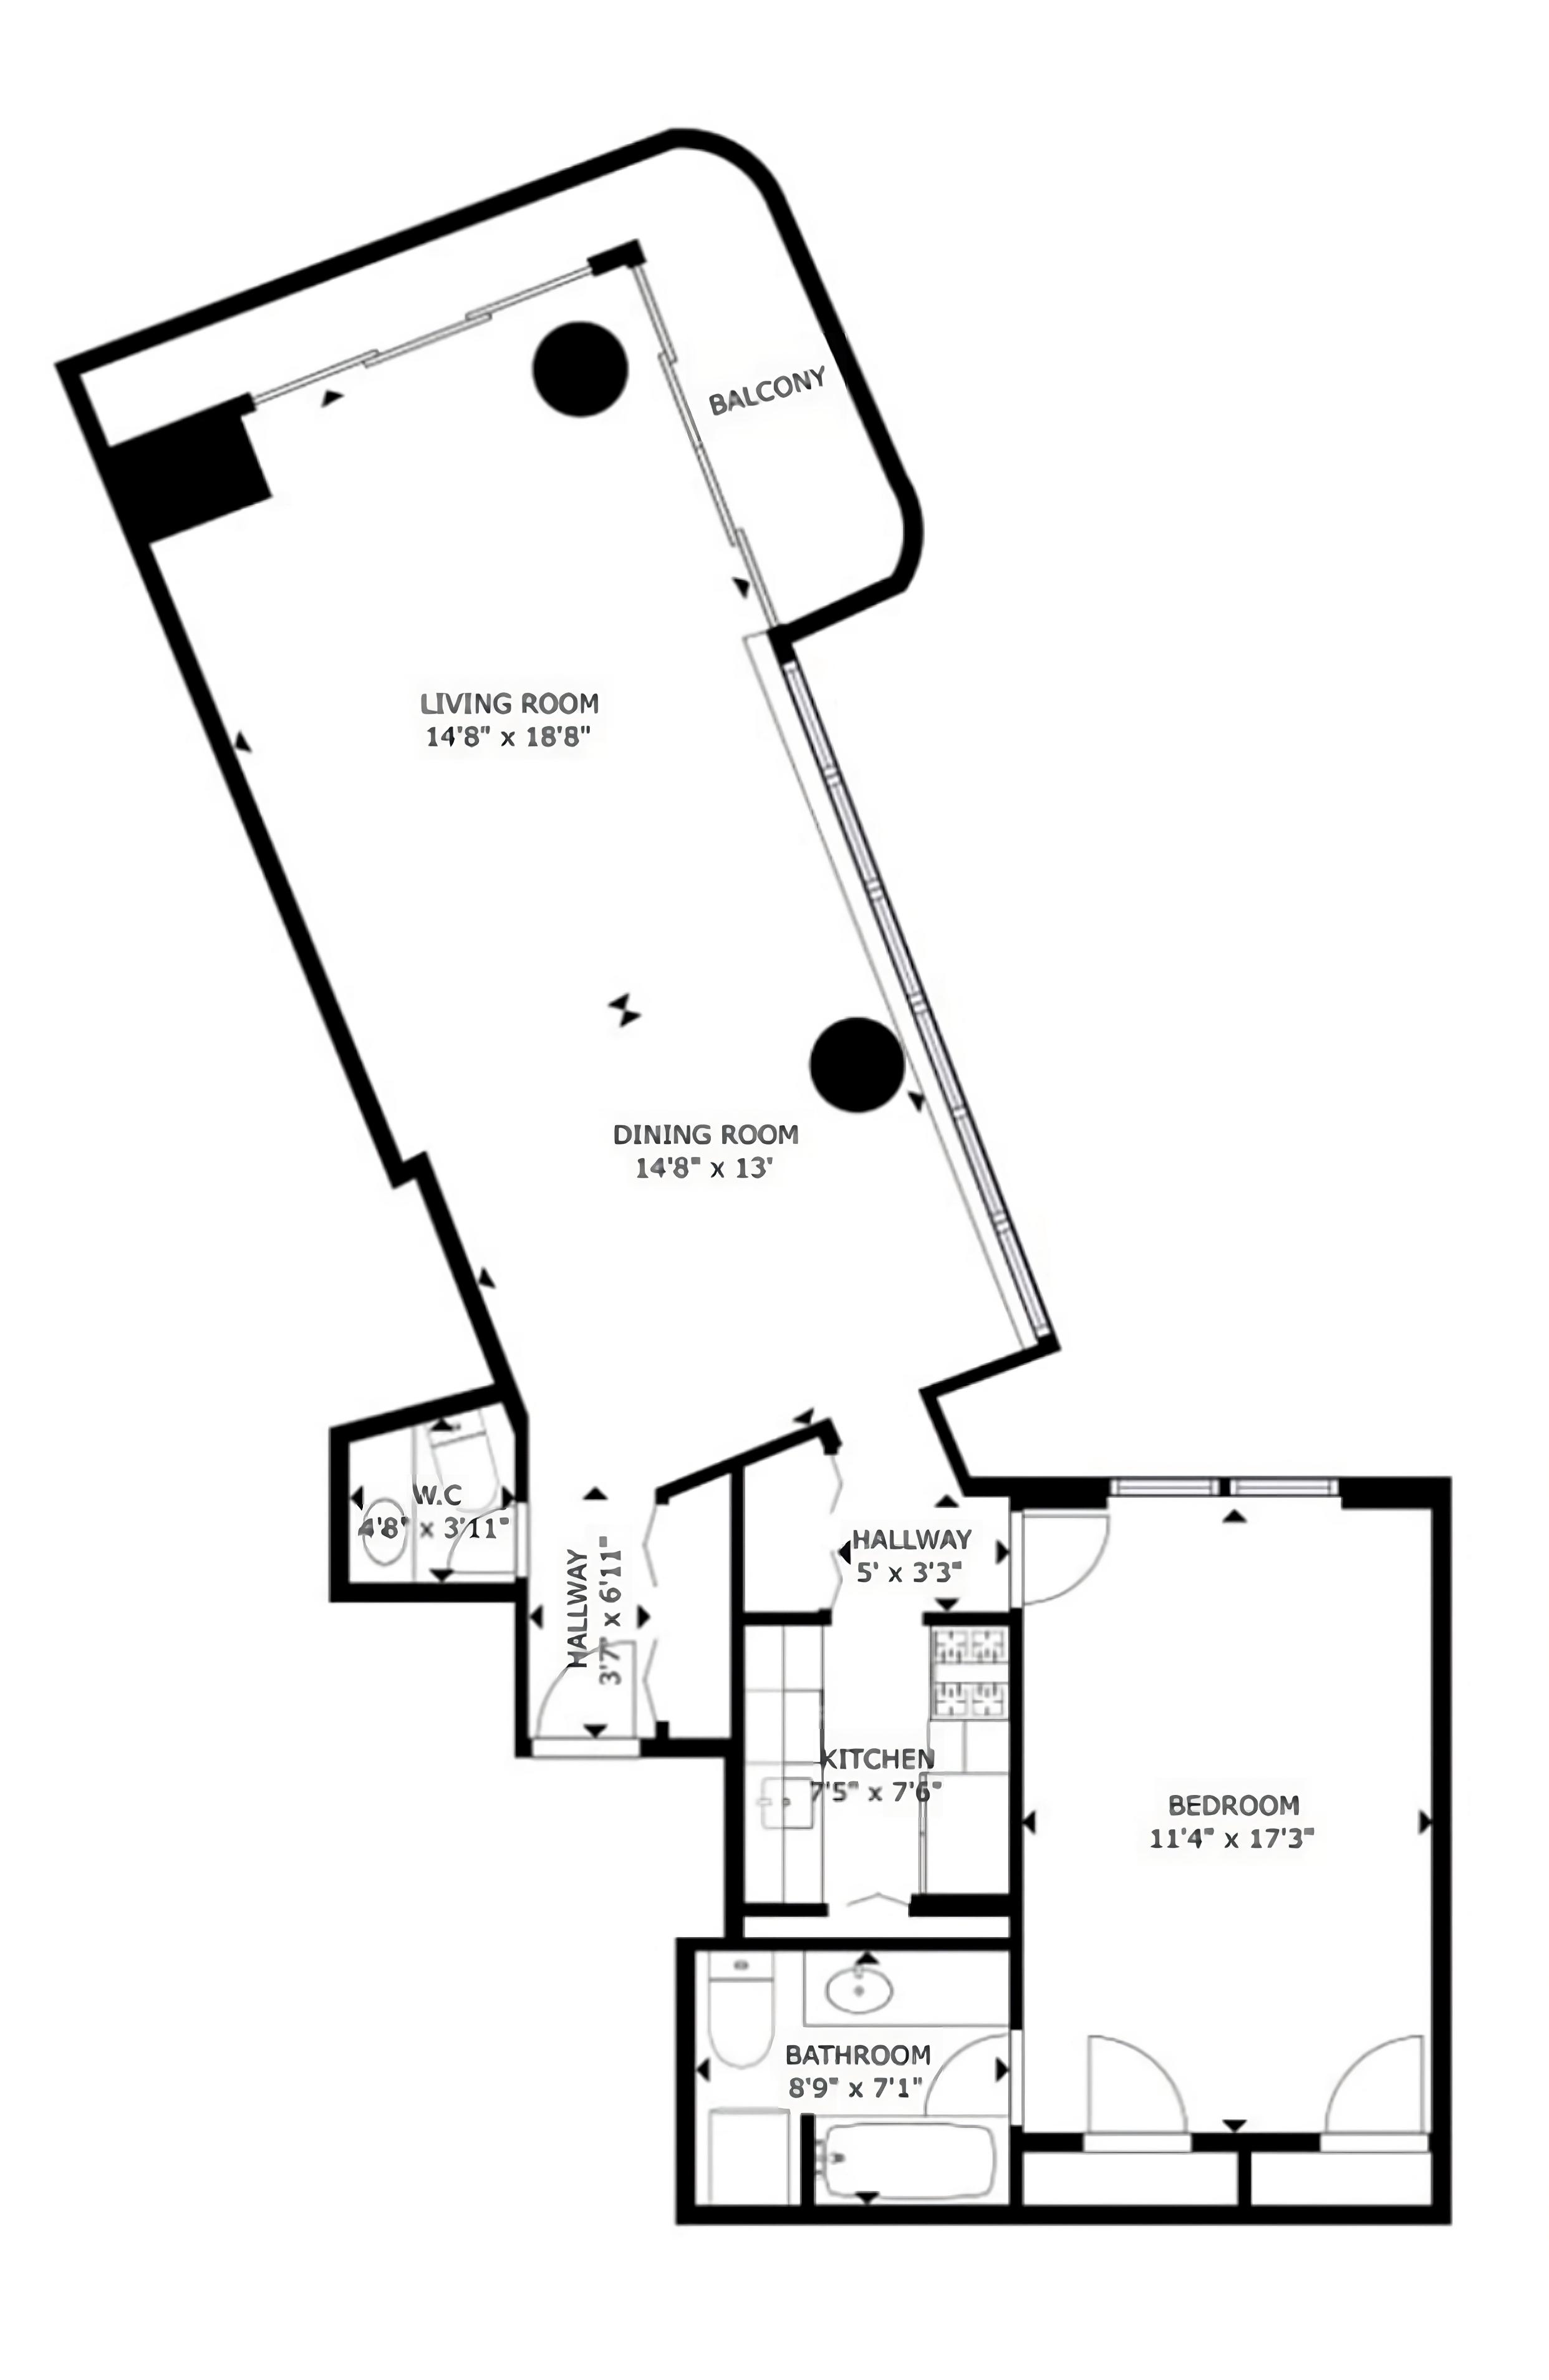 Floorplan for 167 East 61st Street, 11B